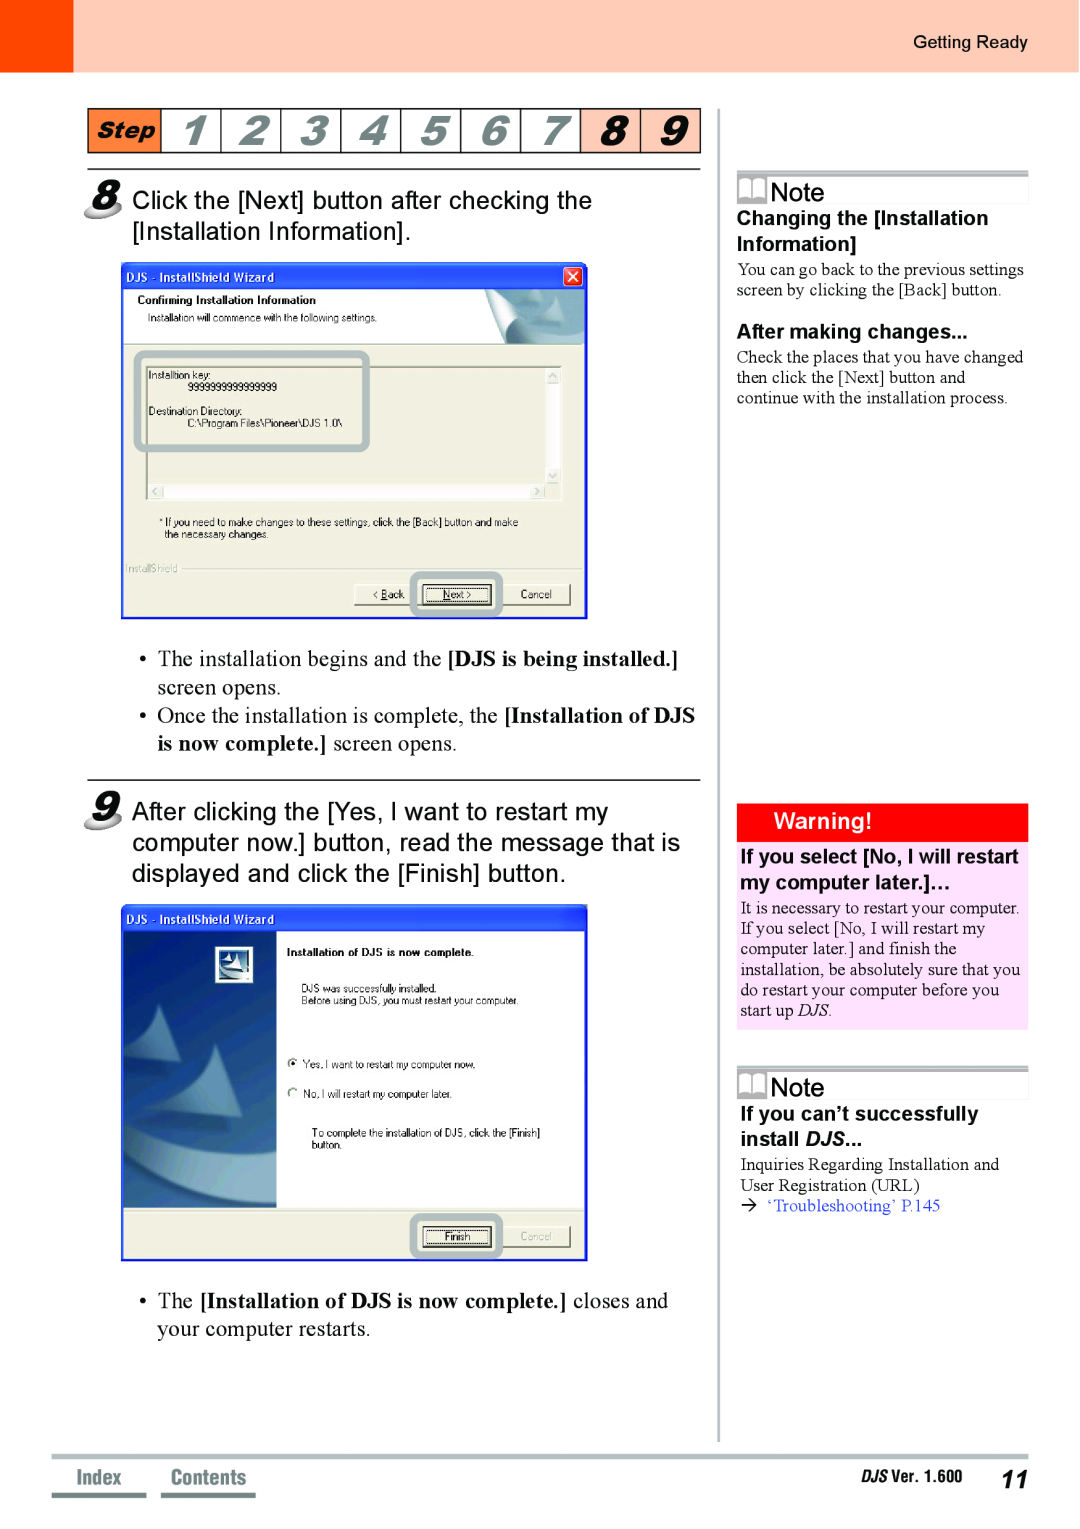 Pioneer SVJ-DS01D manual 2 3 4 5 6 7 8, Changing the Installation Information, After making changes, User Registration URL 